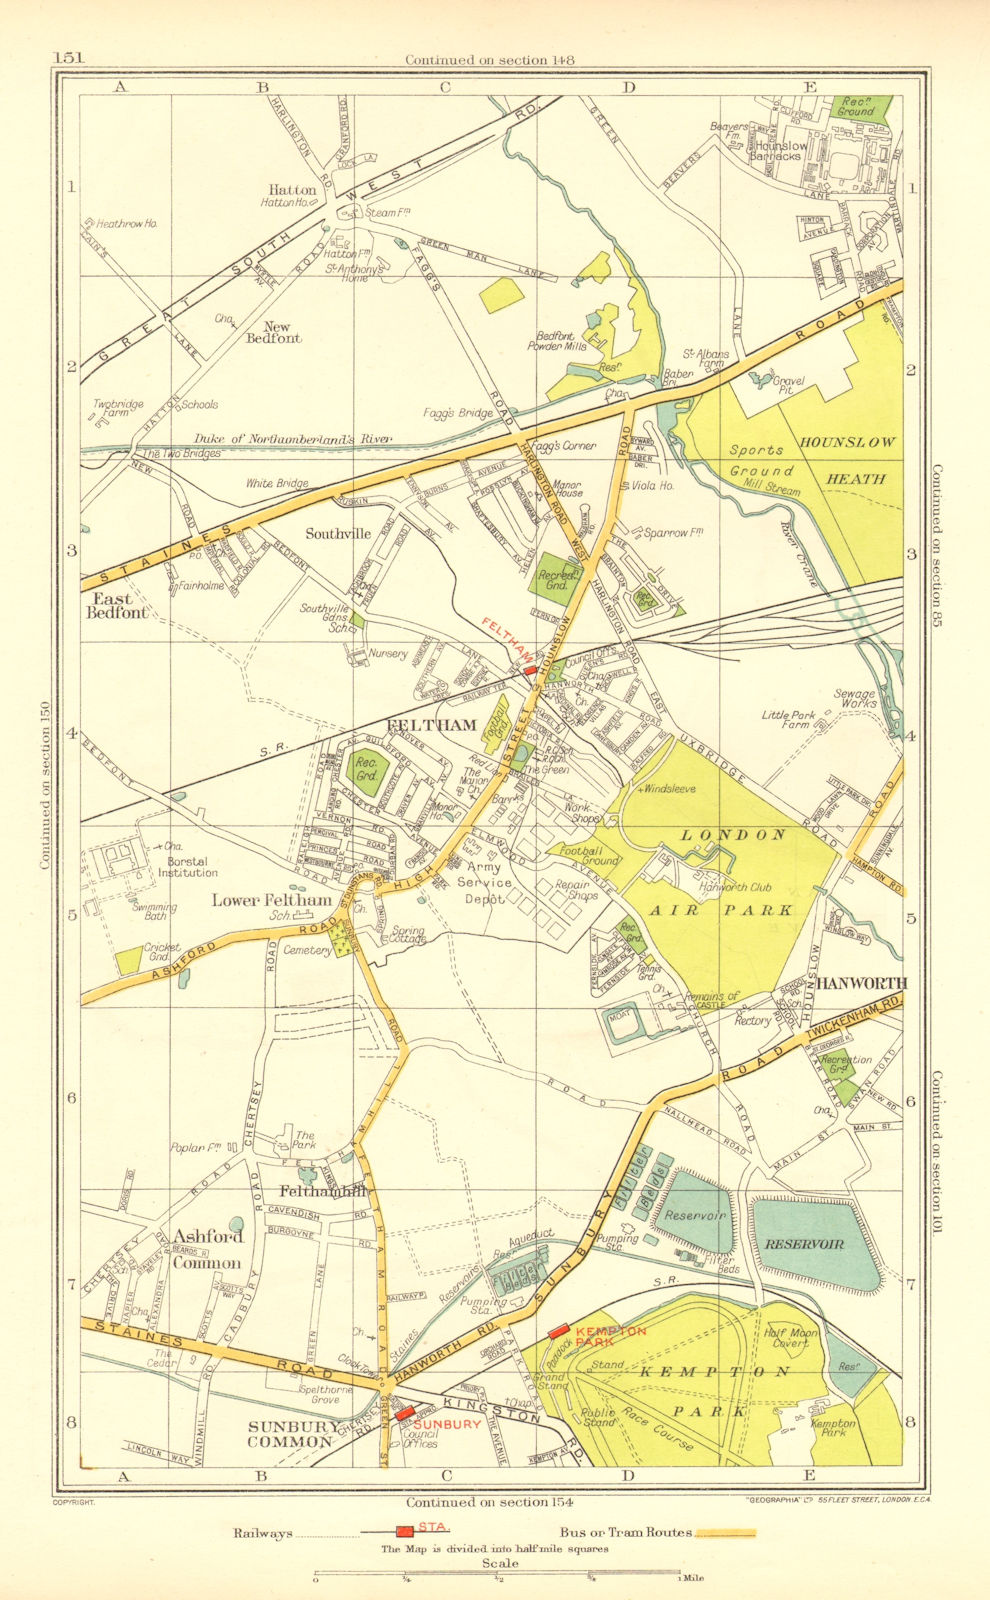 FELTHAM. Hounslow Hatton Sunbury Common Hanworth Ashford Common 1937 old map